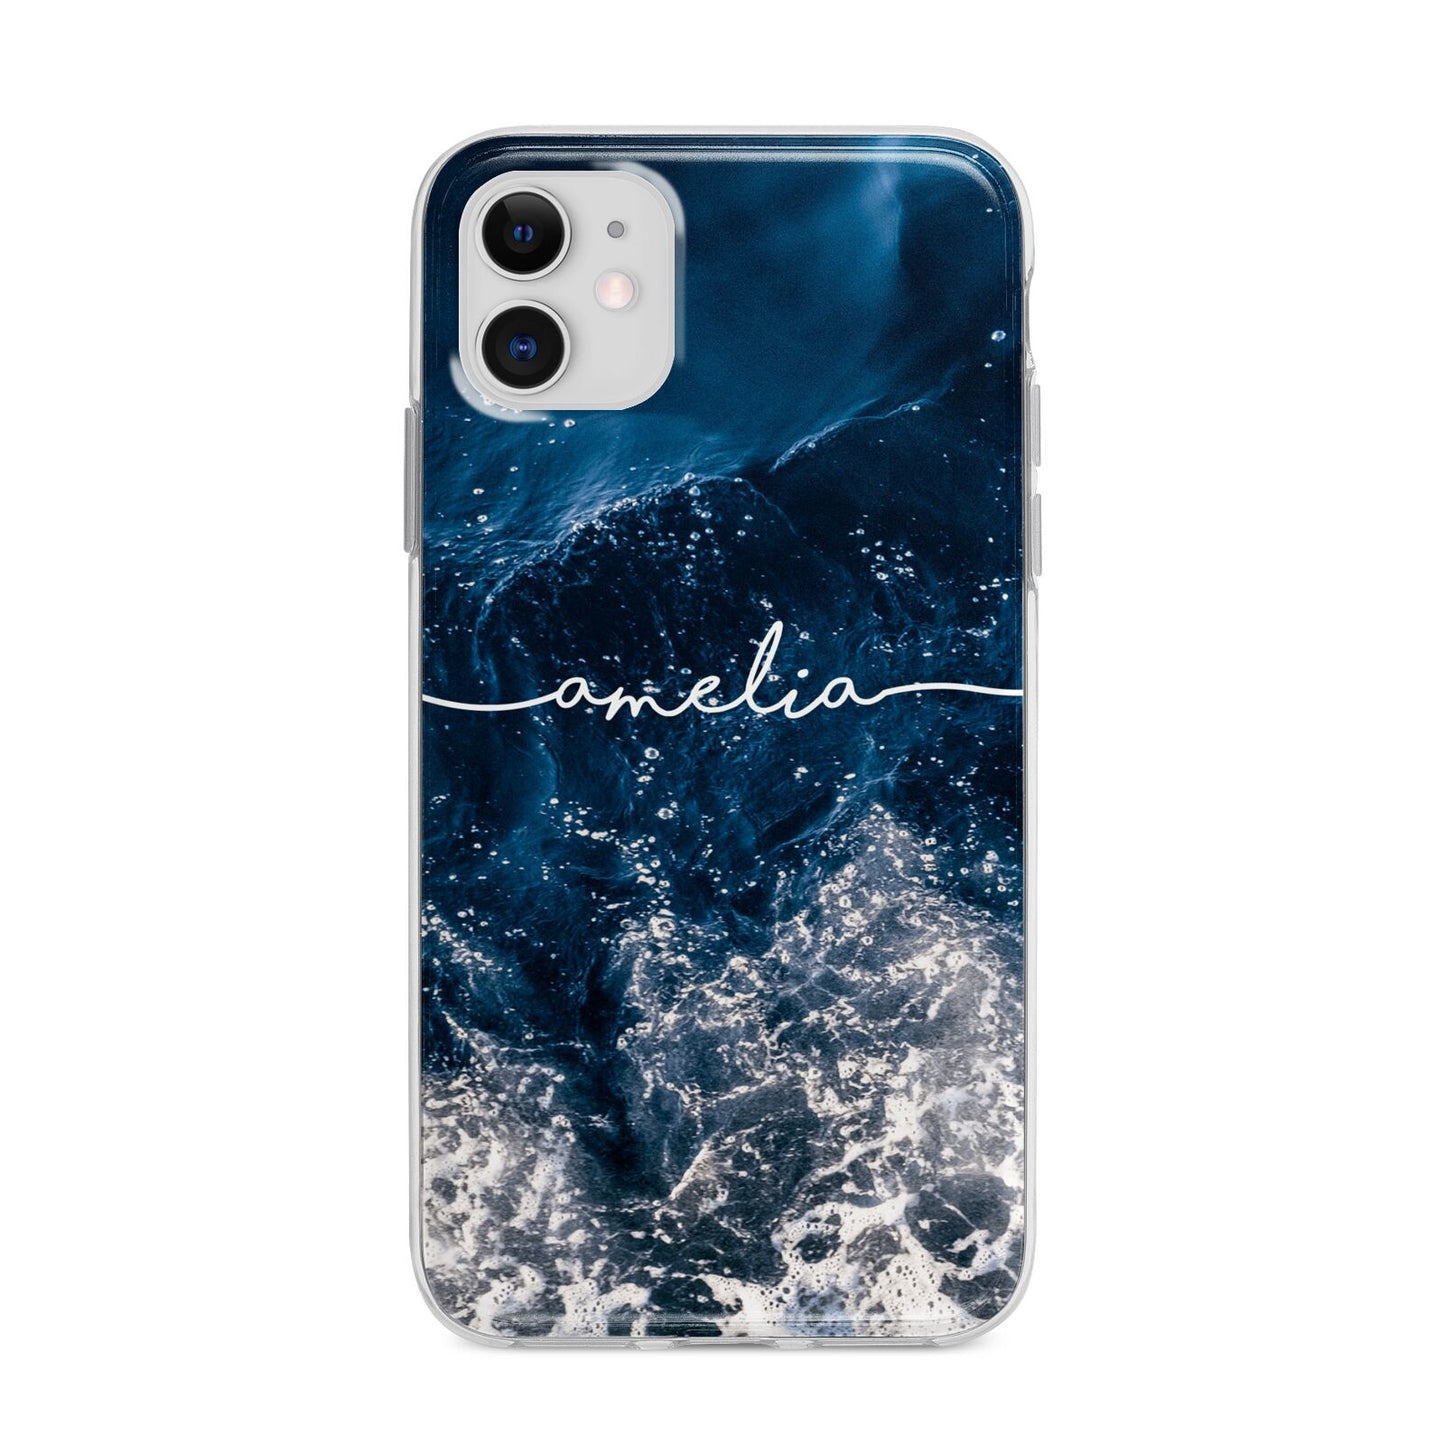 Custom Sea Apple iPhone 11 in White with Bumper Case